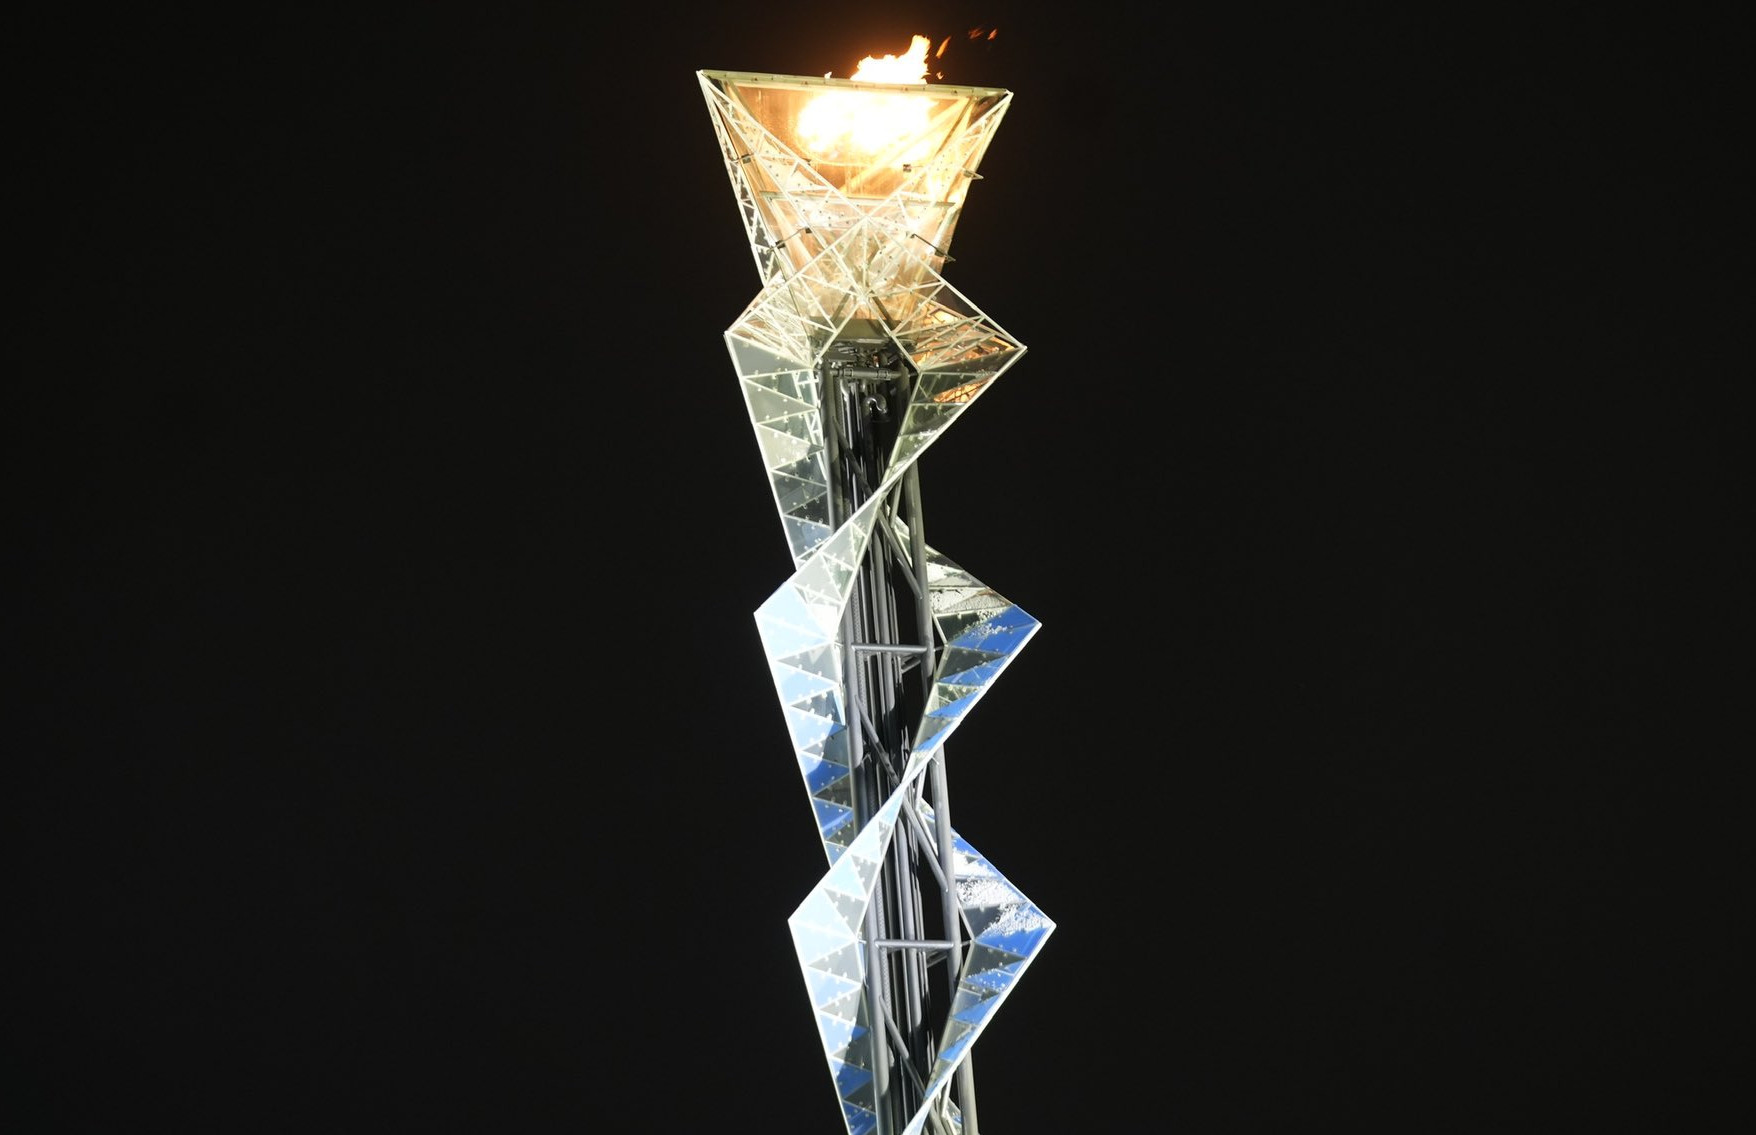 2034 Olympics: Salt Lake City to relight 2002 Winter Games' cauldron